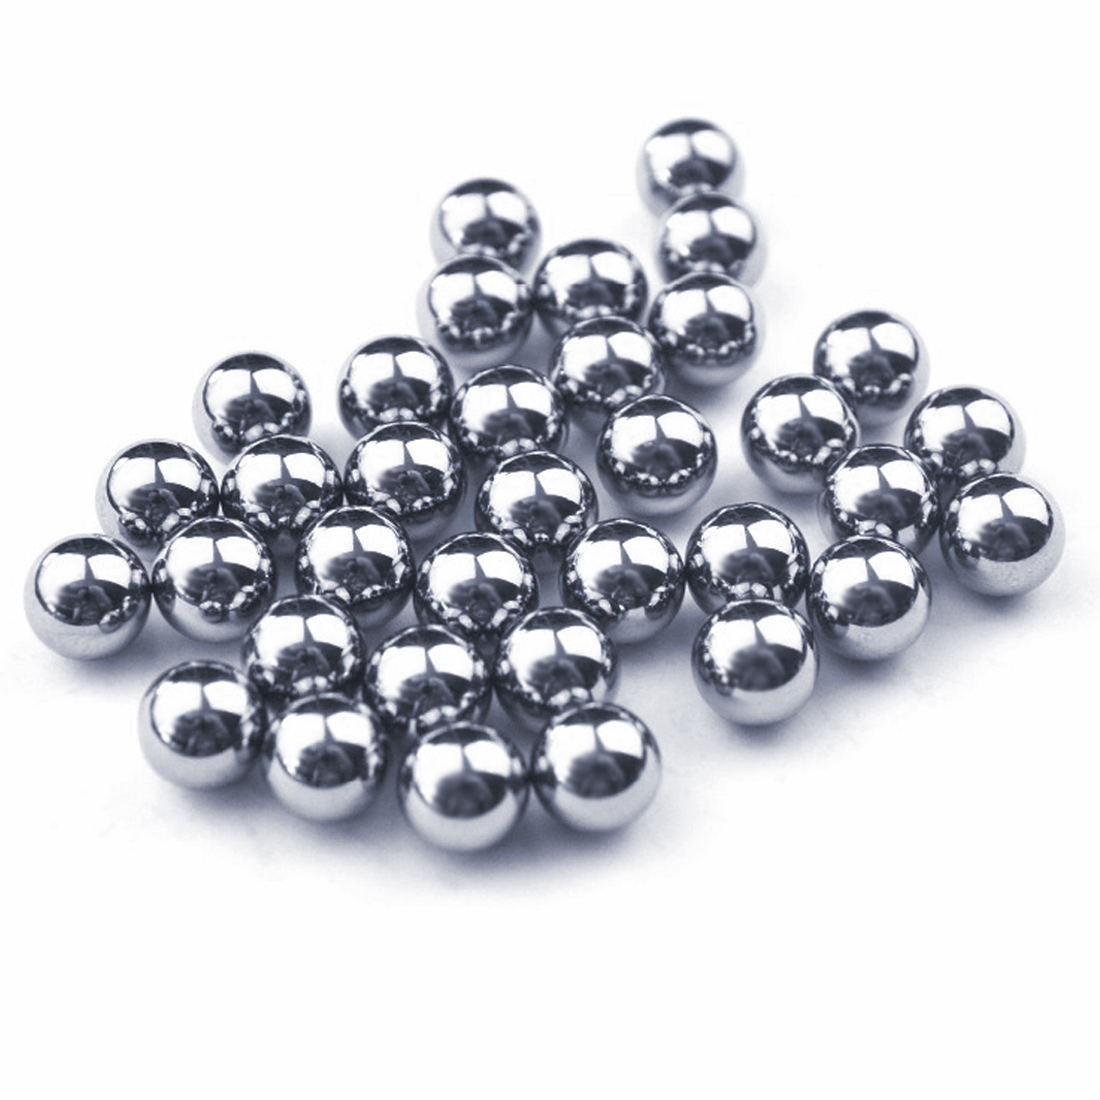 Bulk Steel Balls